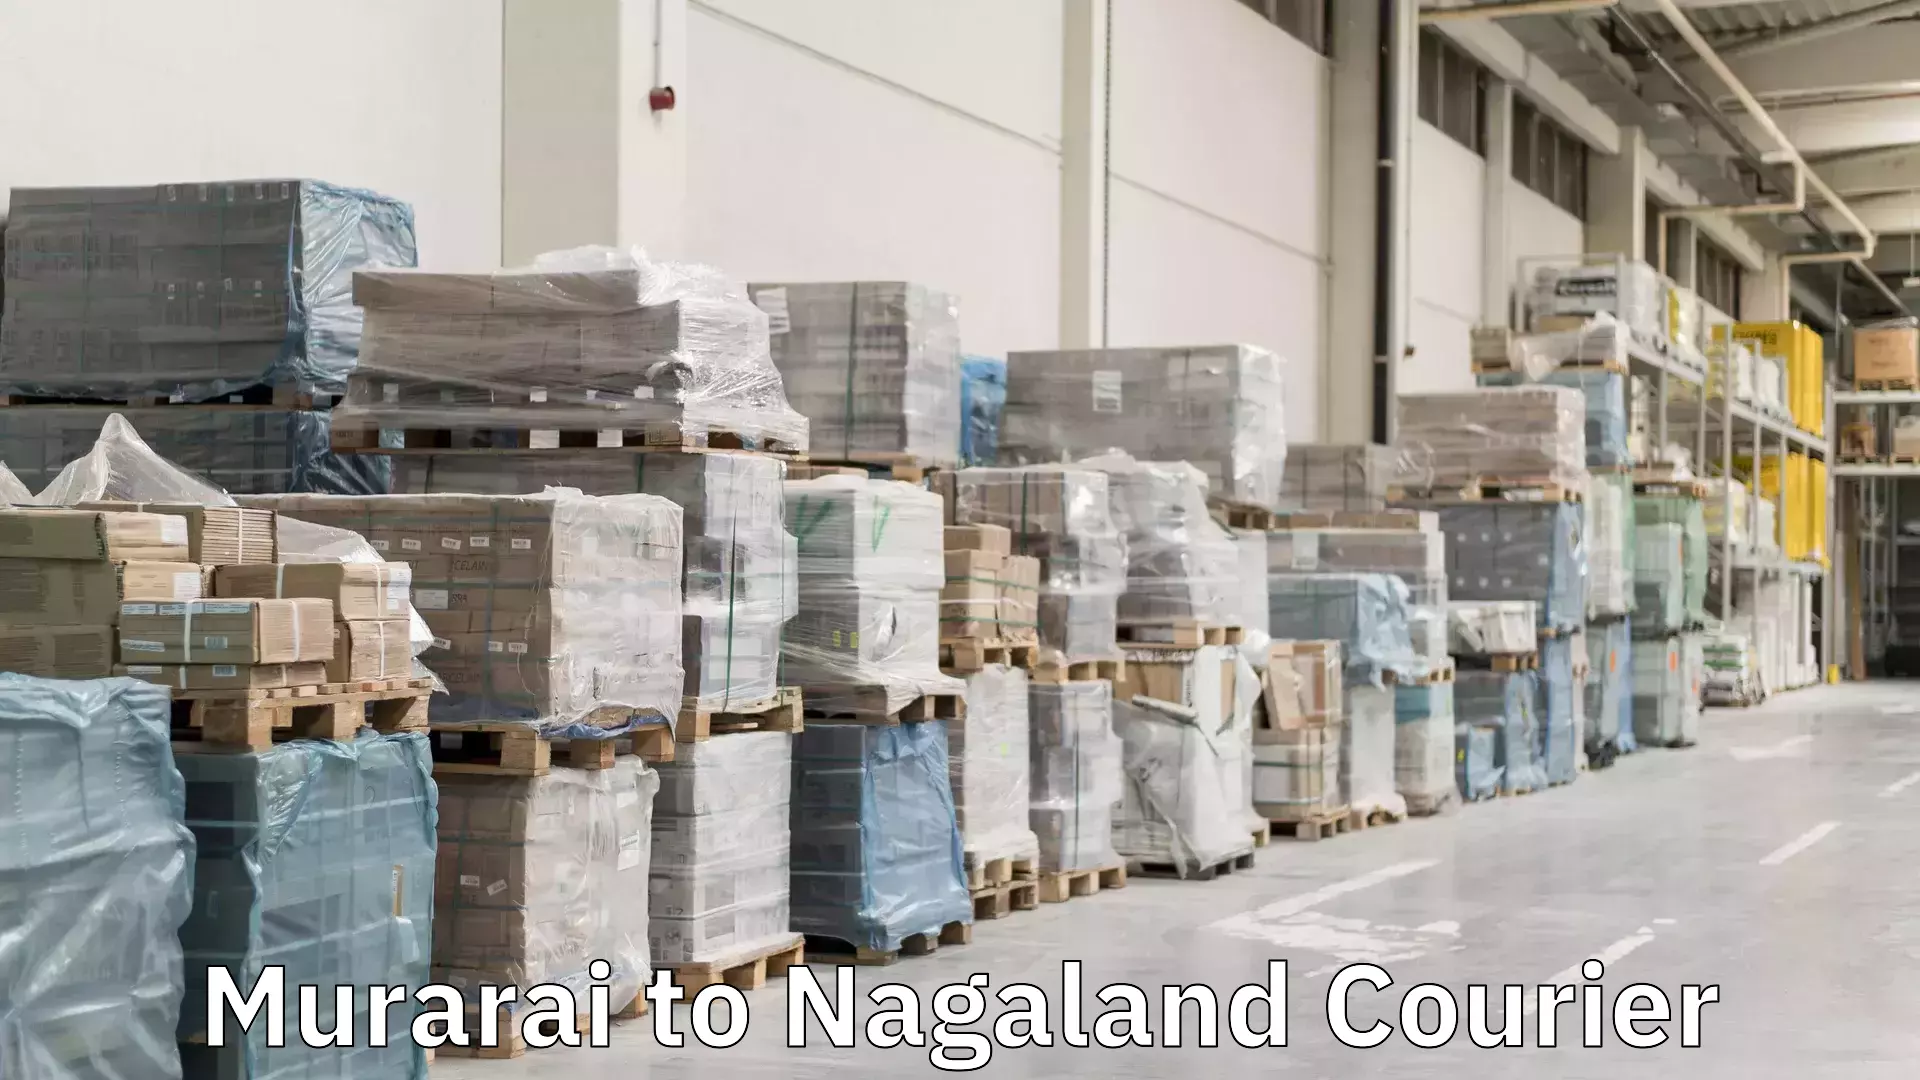 Express delivery network Murarai to Nagaland